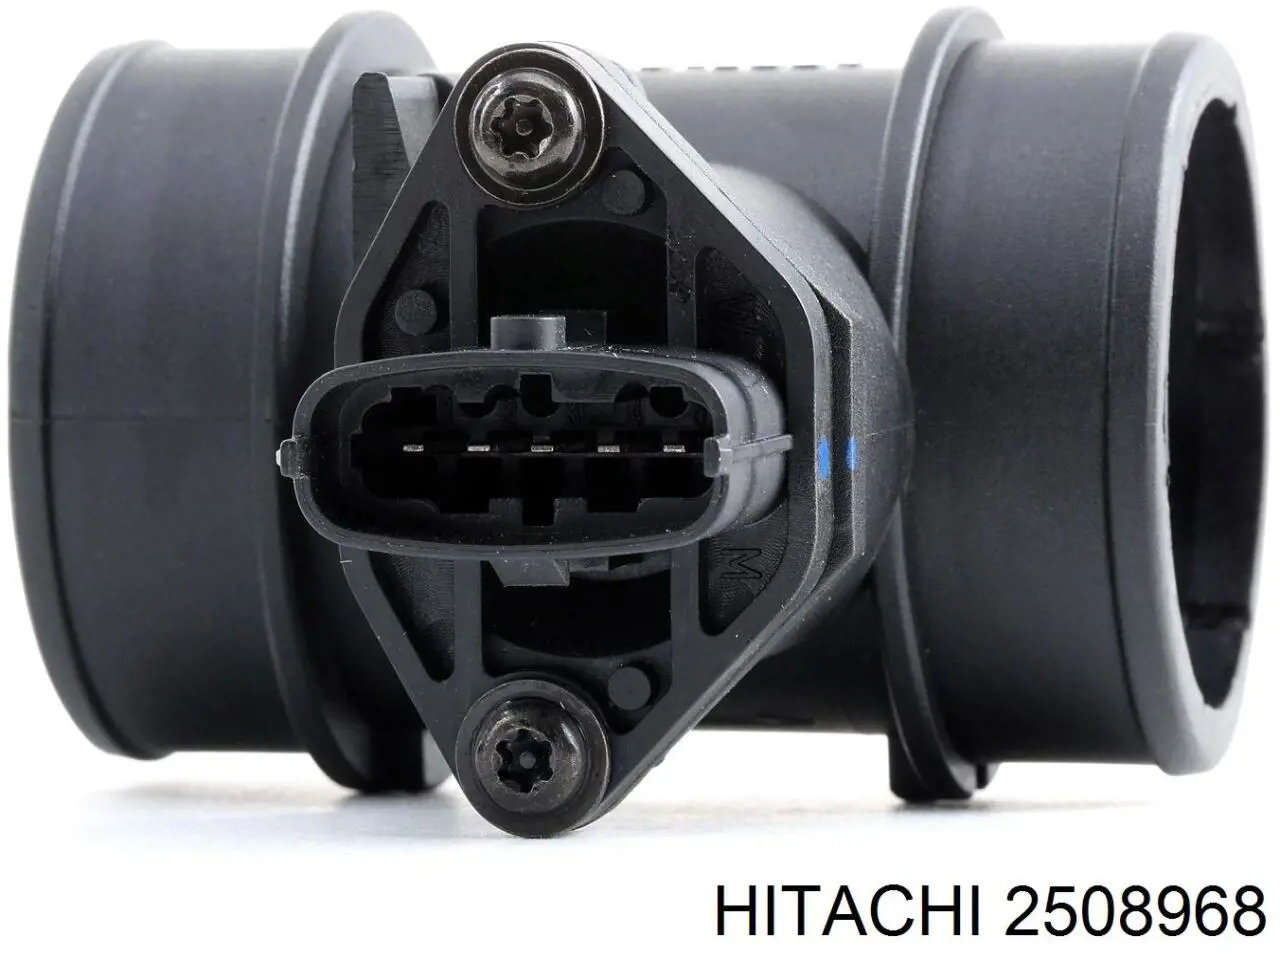 2508968 Hitachi caudalímetro